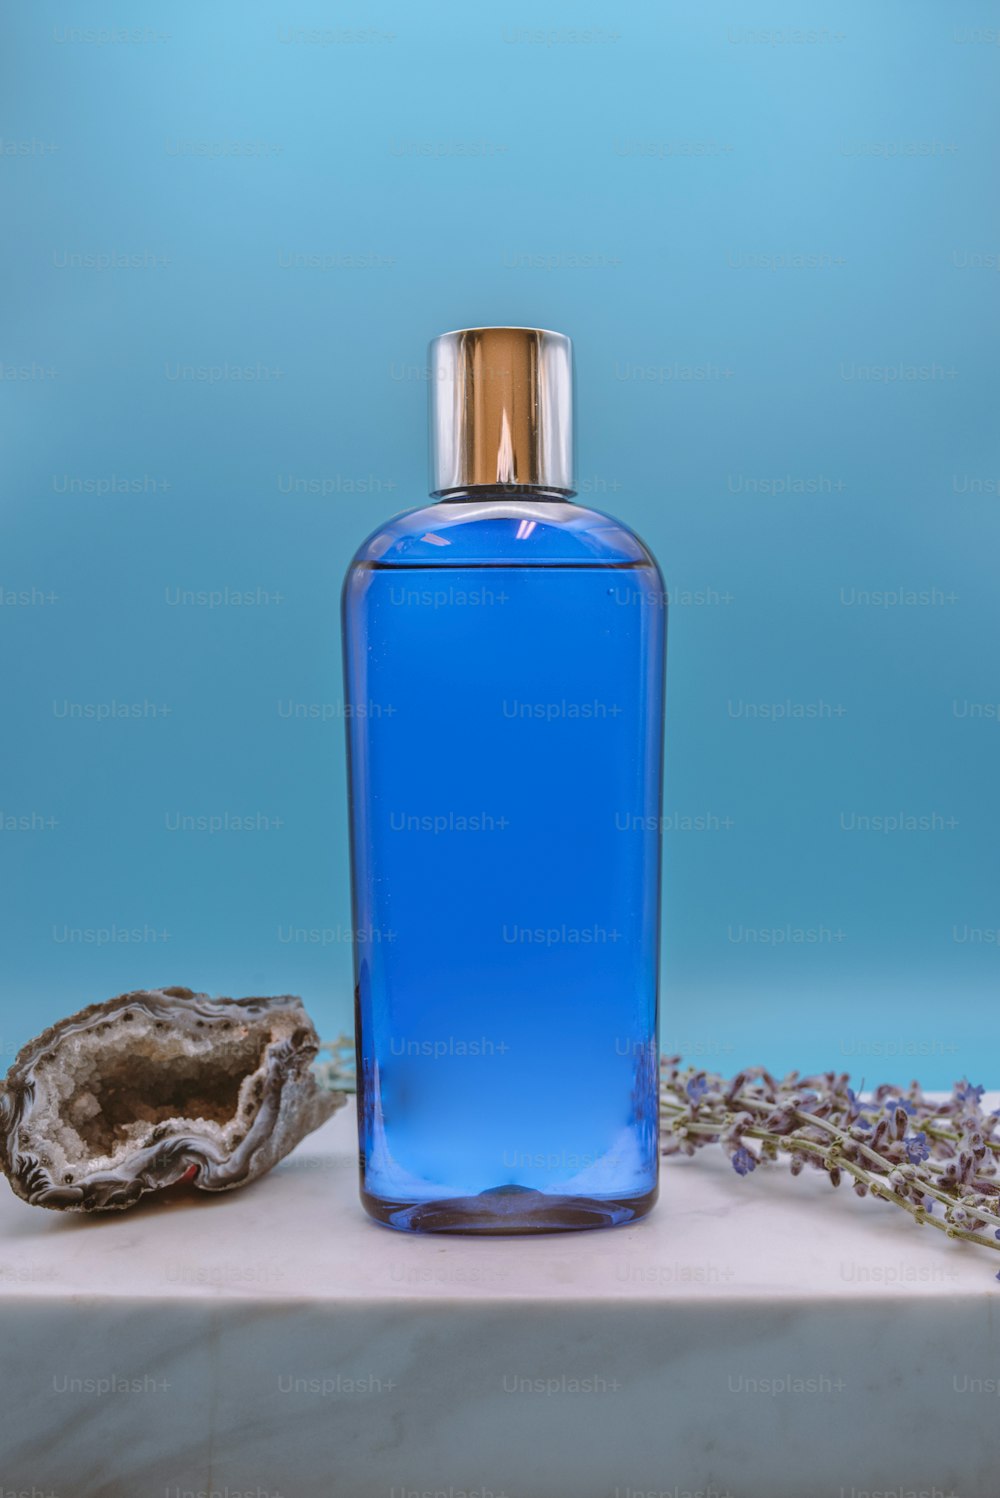 a bottle of blue liquid next to a rock